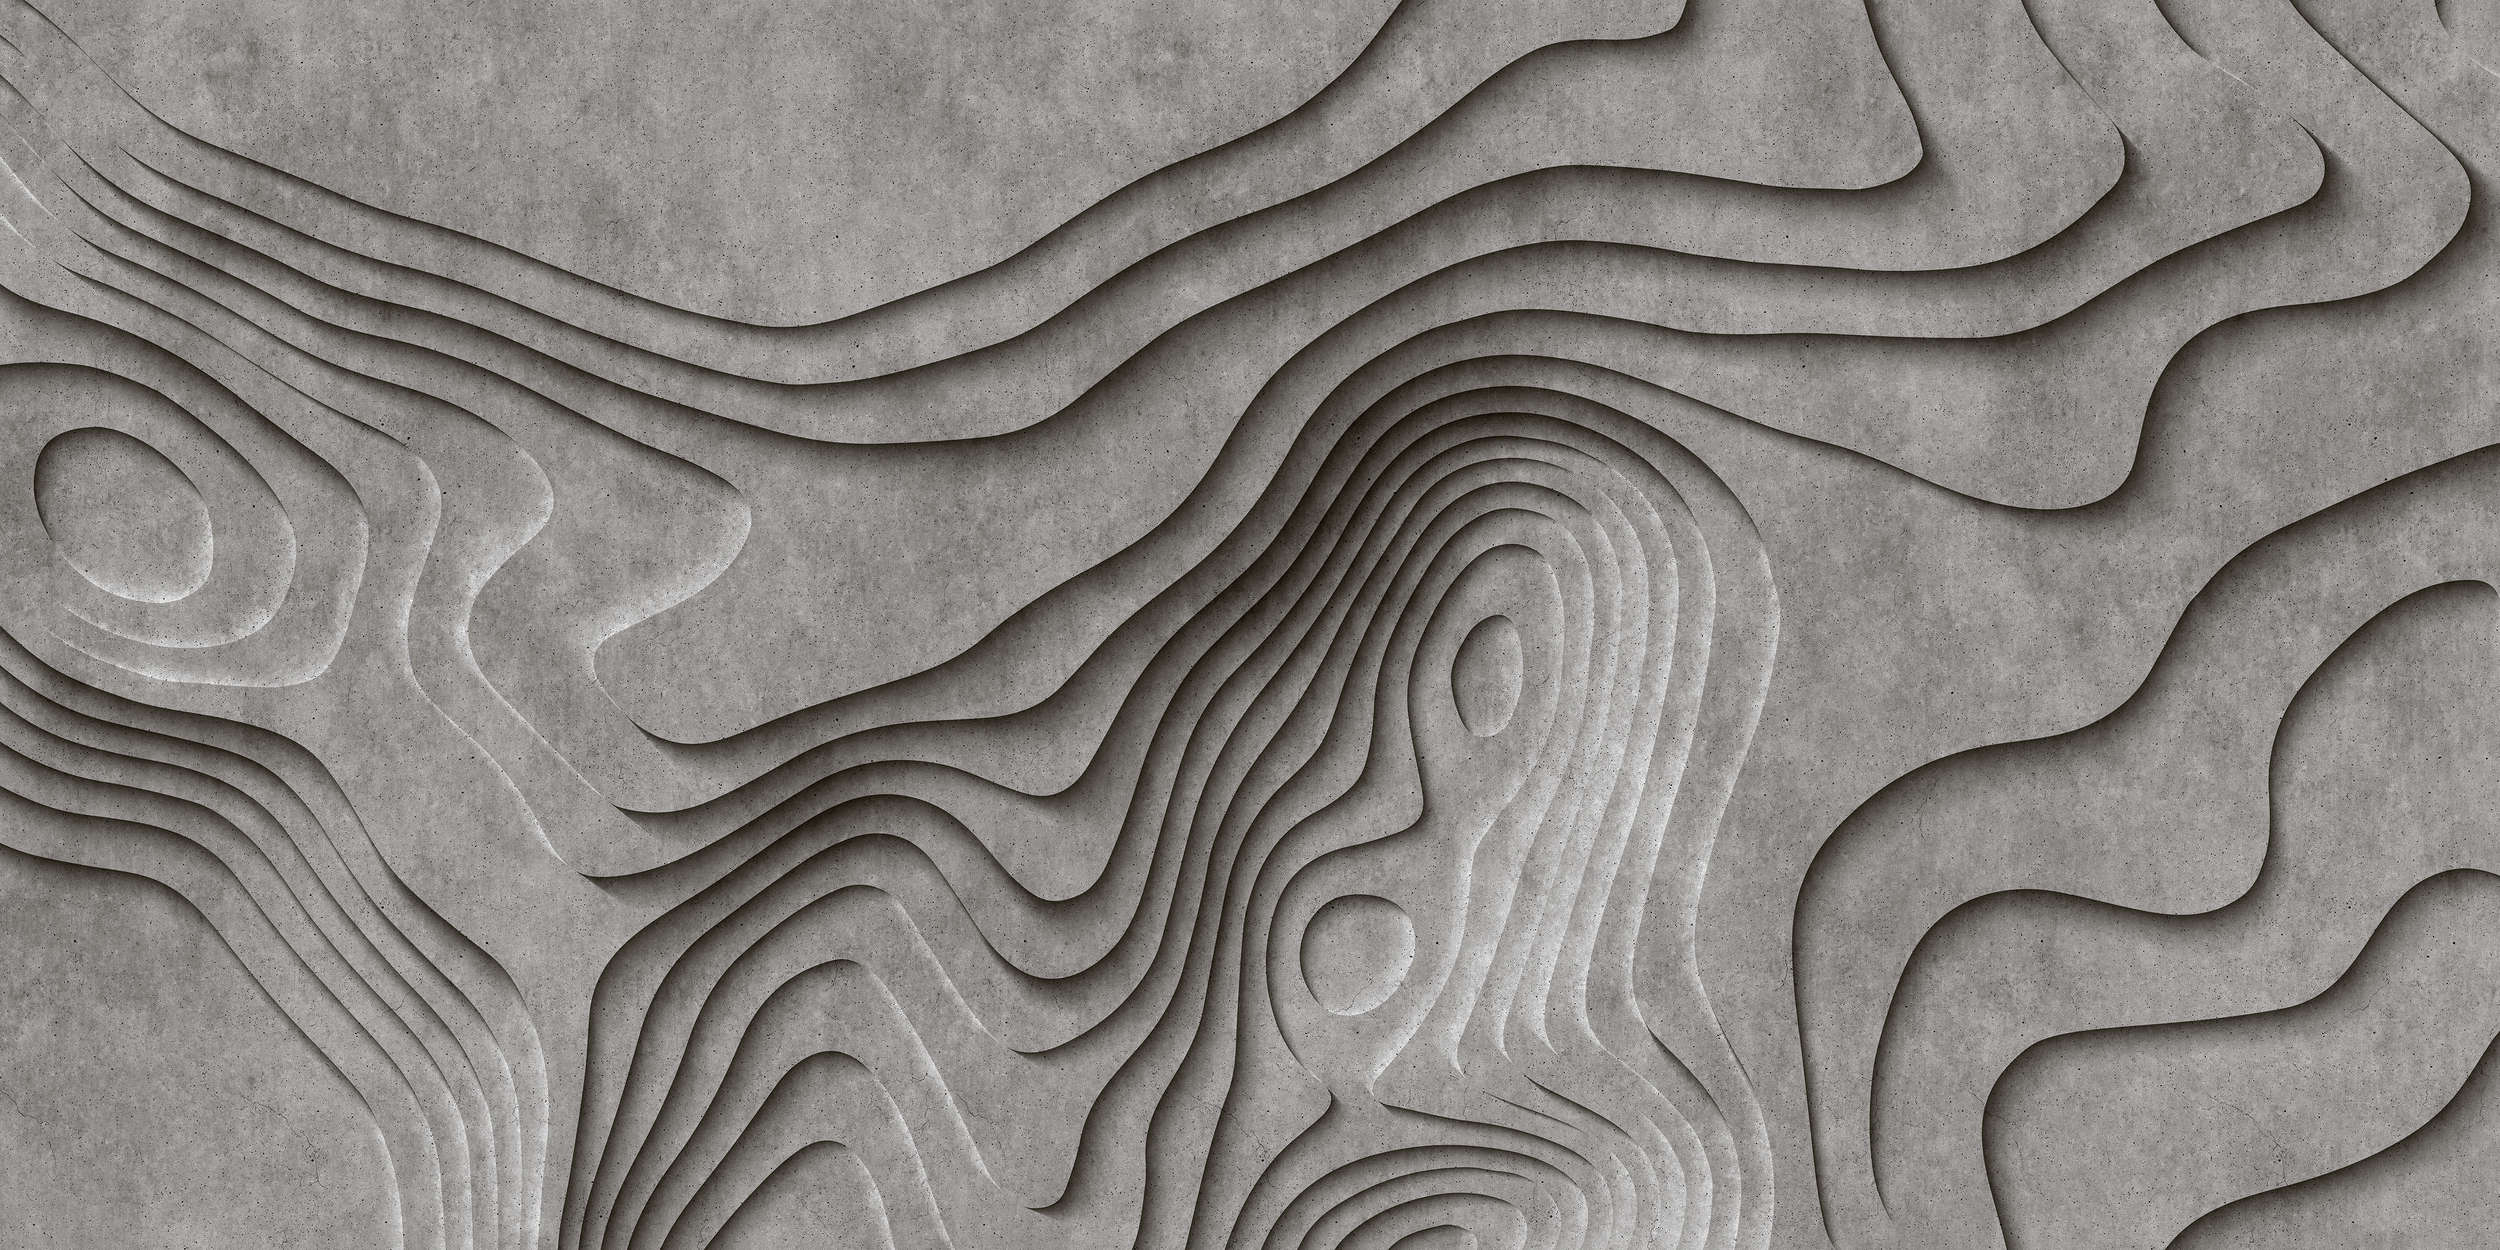             Canyon 1 - Cool 3D Concrete Canyon Onderlaag behang - Grijs, Zwart | Textuur Niet-geweven
        